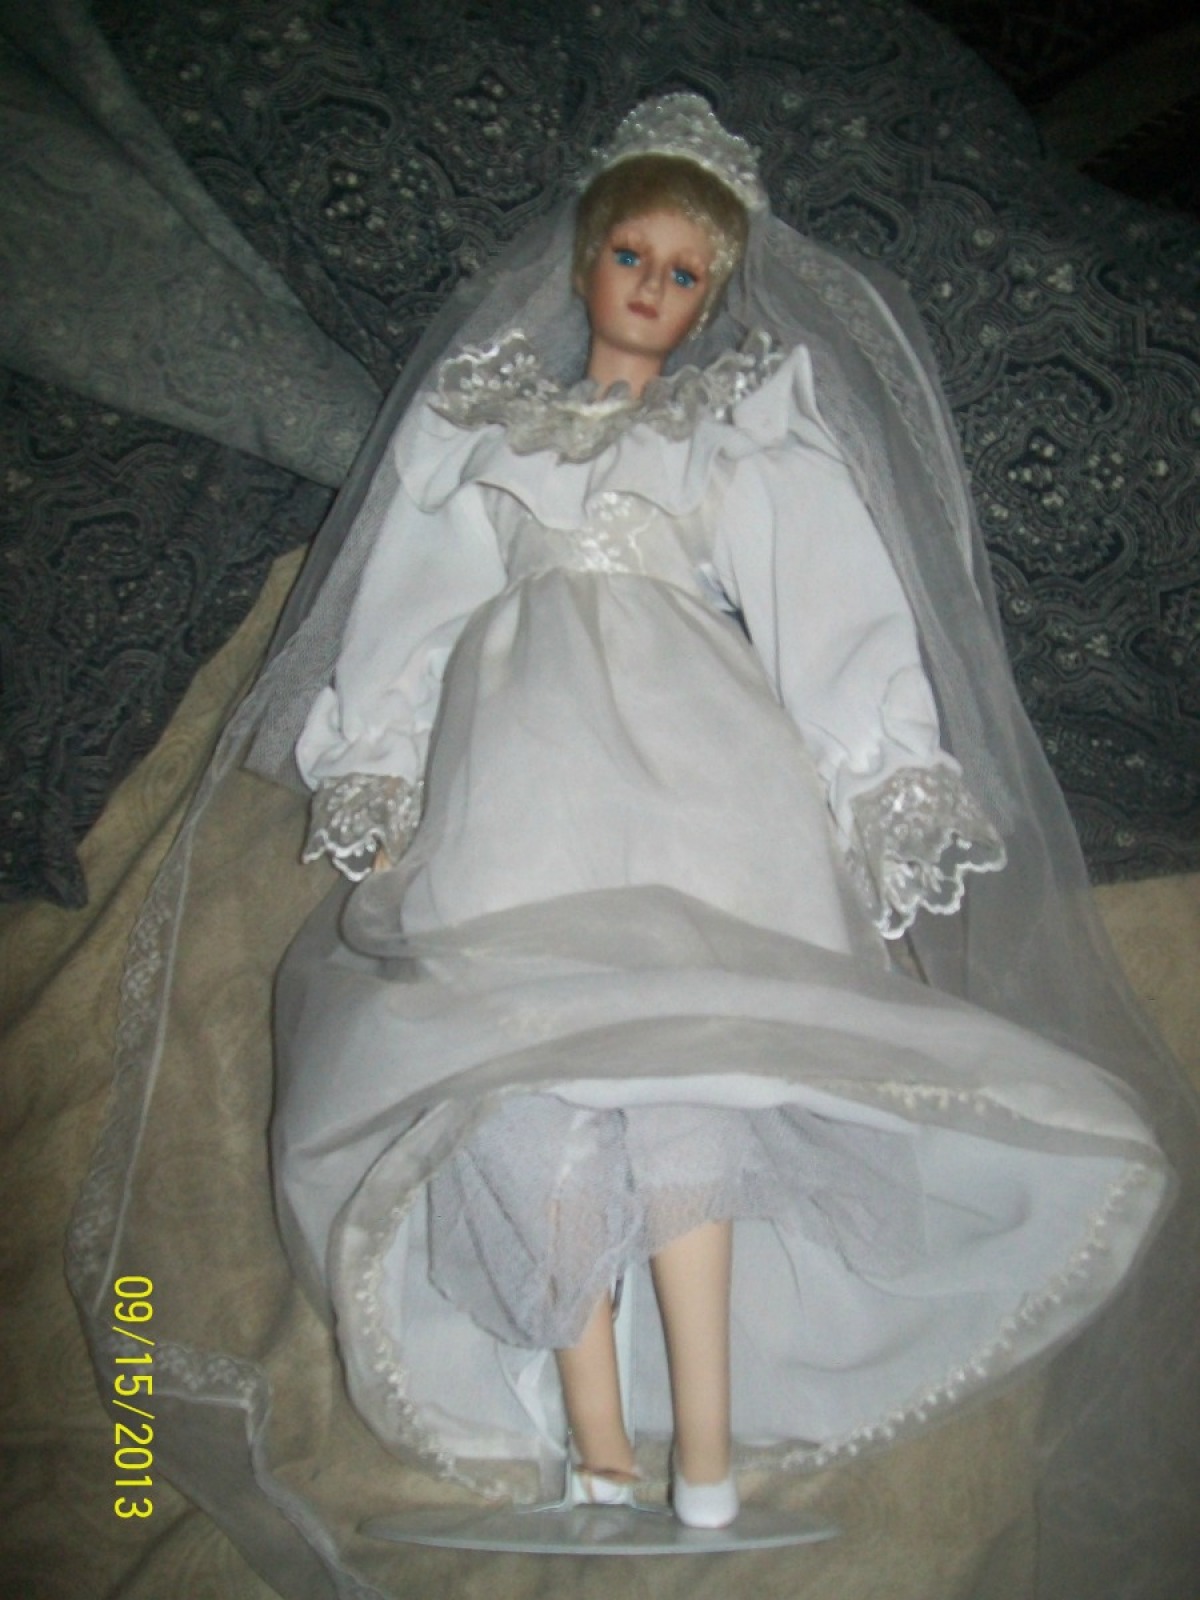 princess diana doll worth